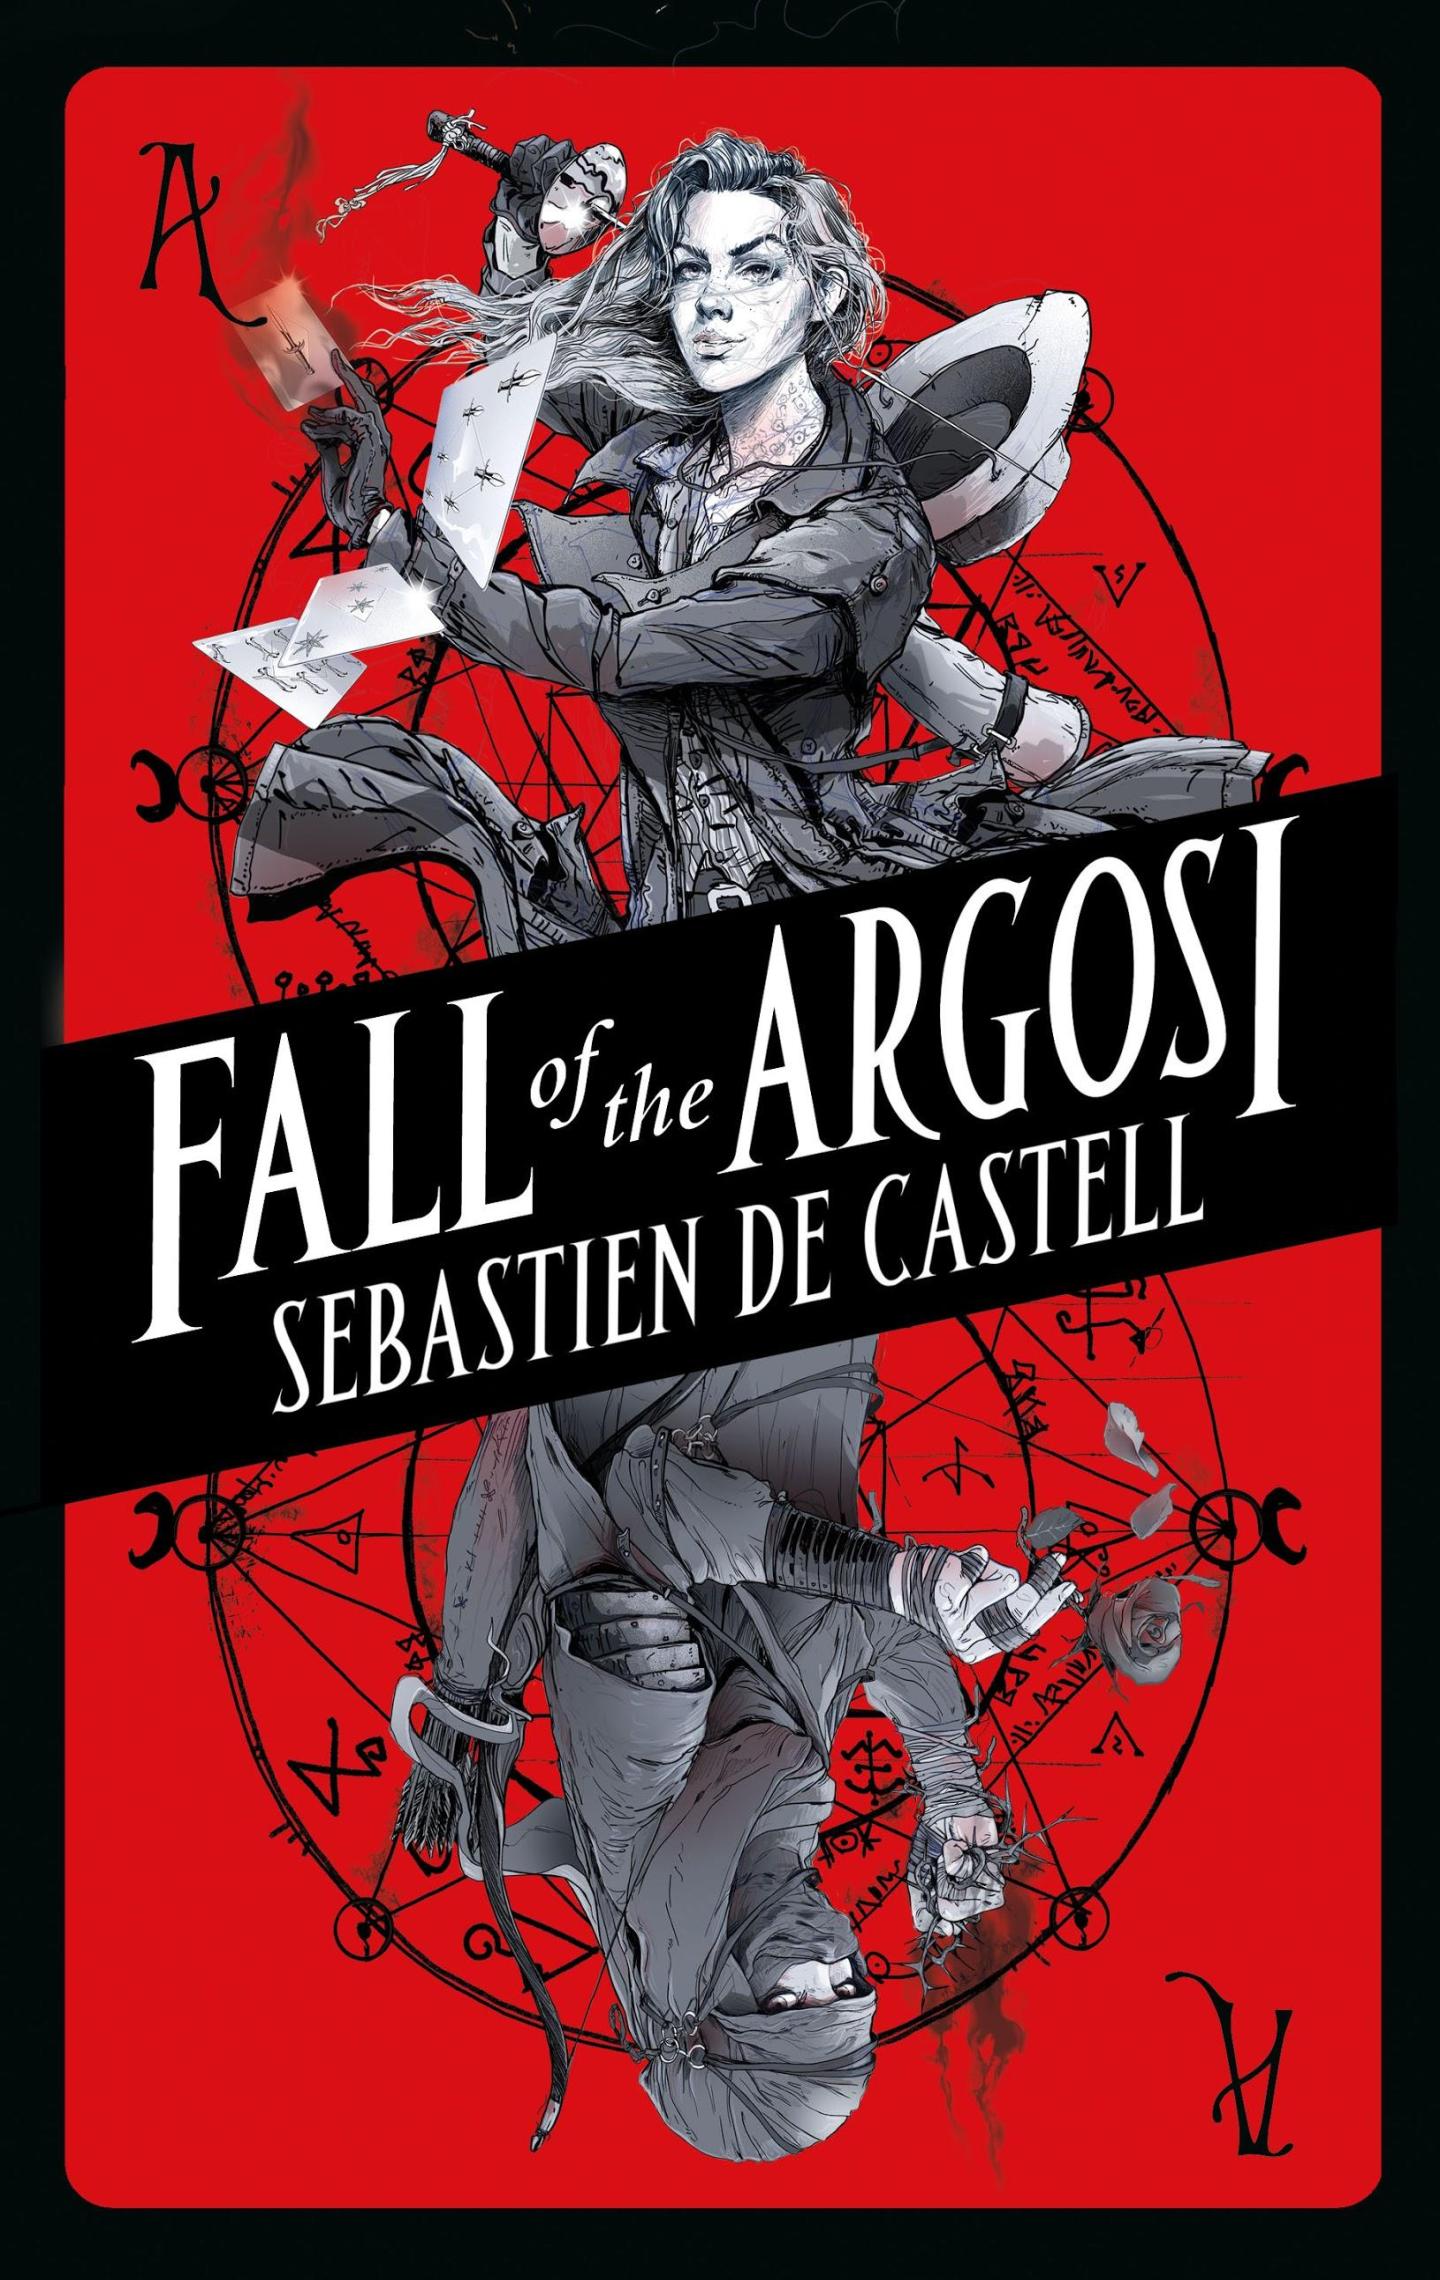 Fall of the Argosi  Sebastien de Castell